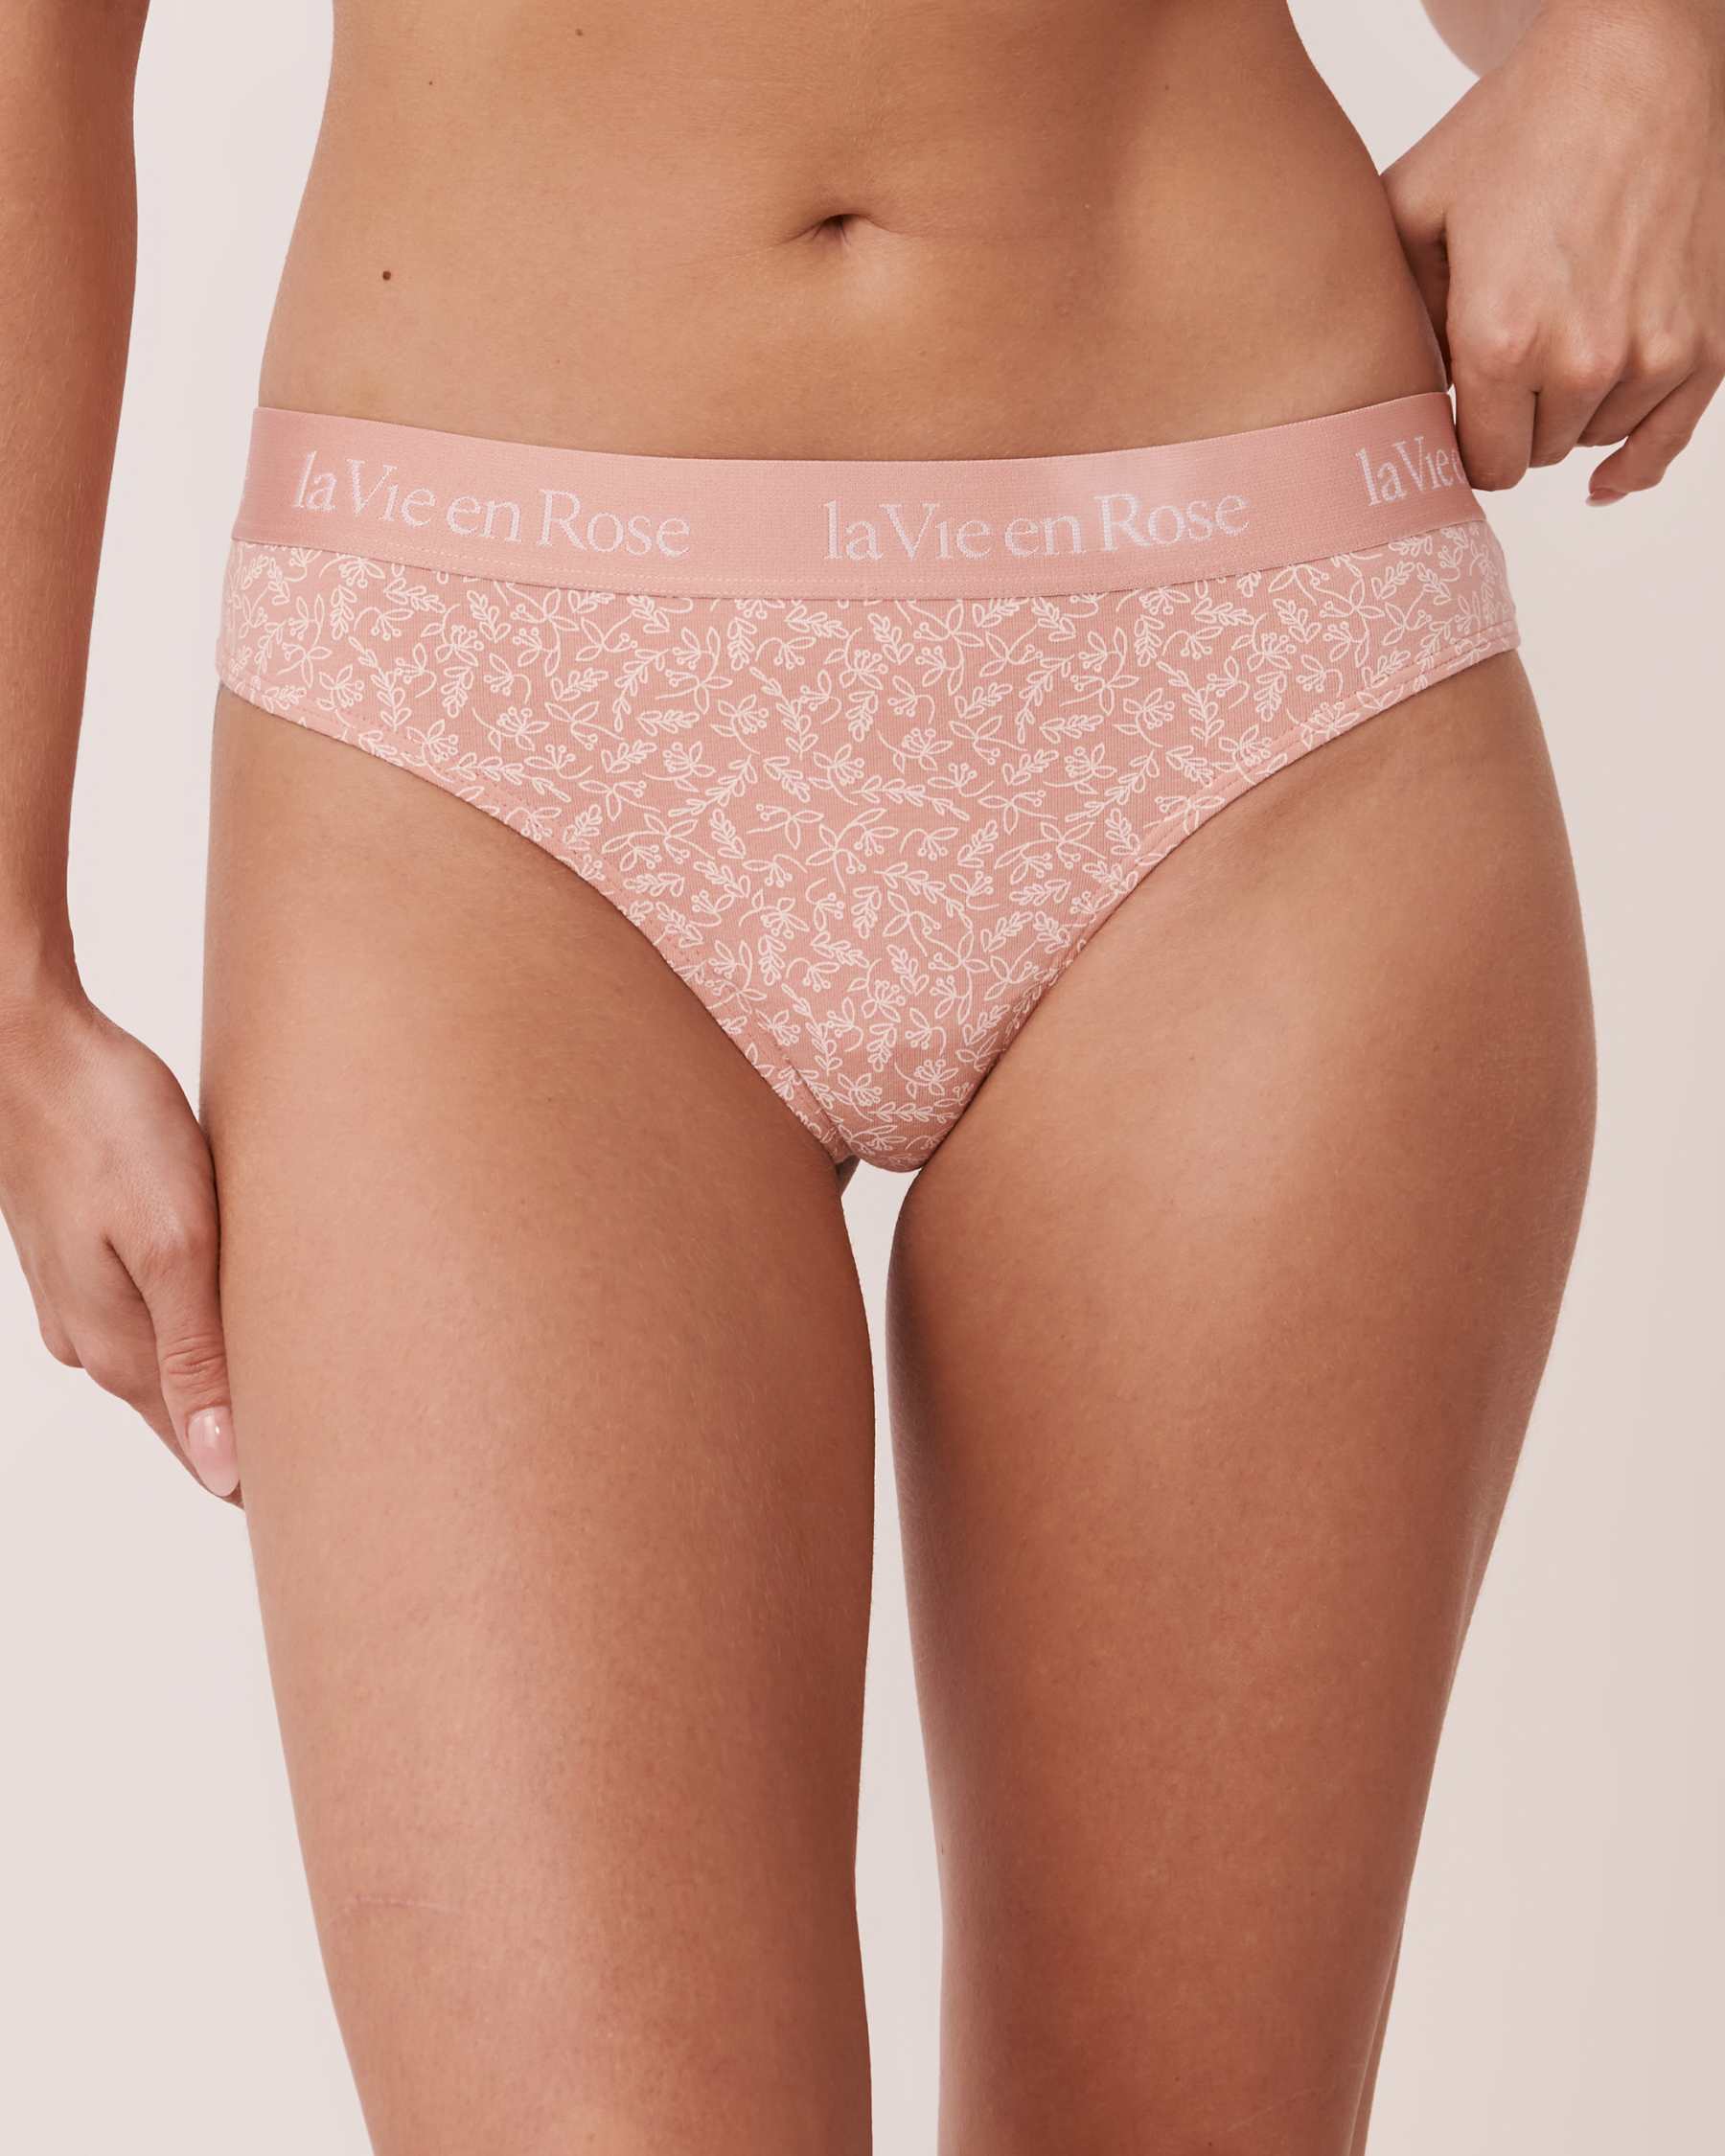 LA VIE EN ROSE Cotton and Logo Elastic Band Thong Panty Pink foliage 20100212 - View1